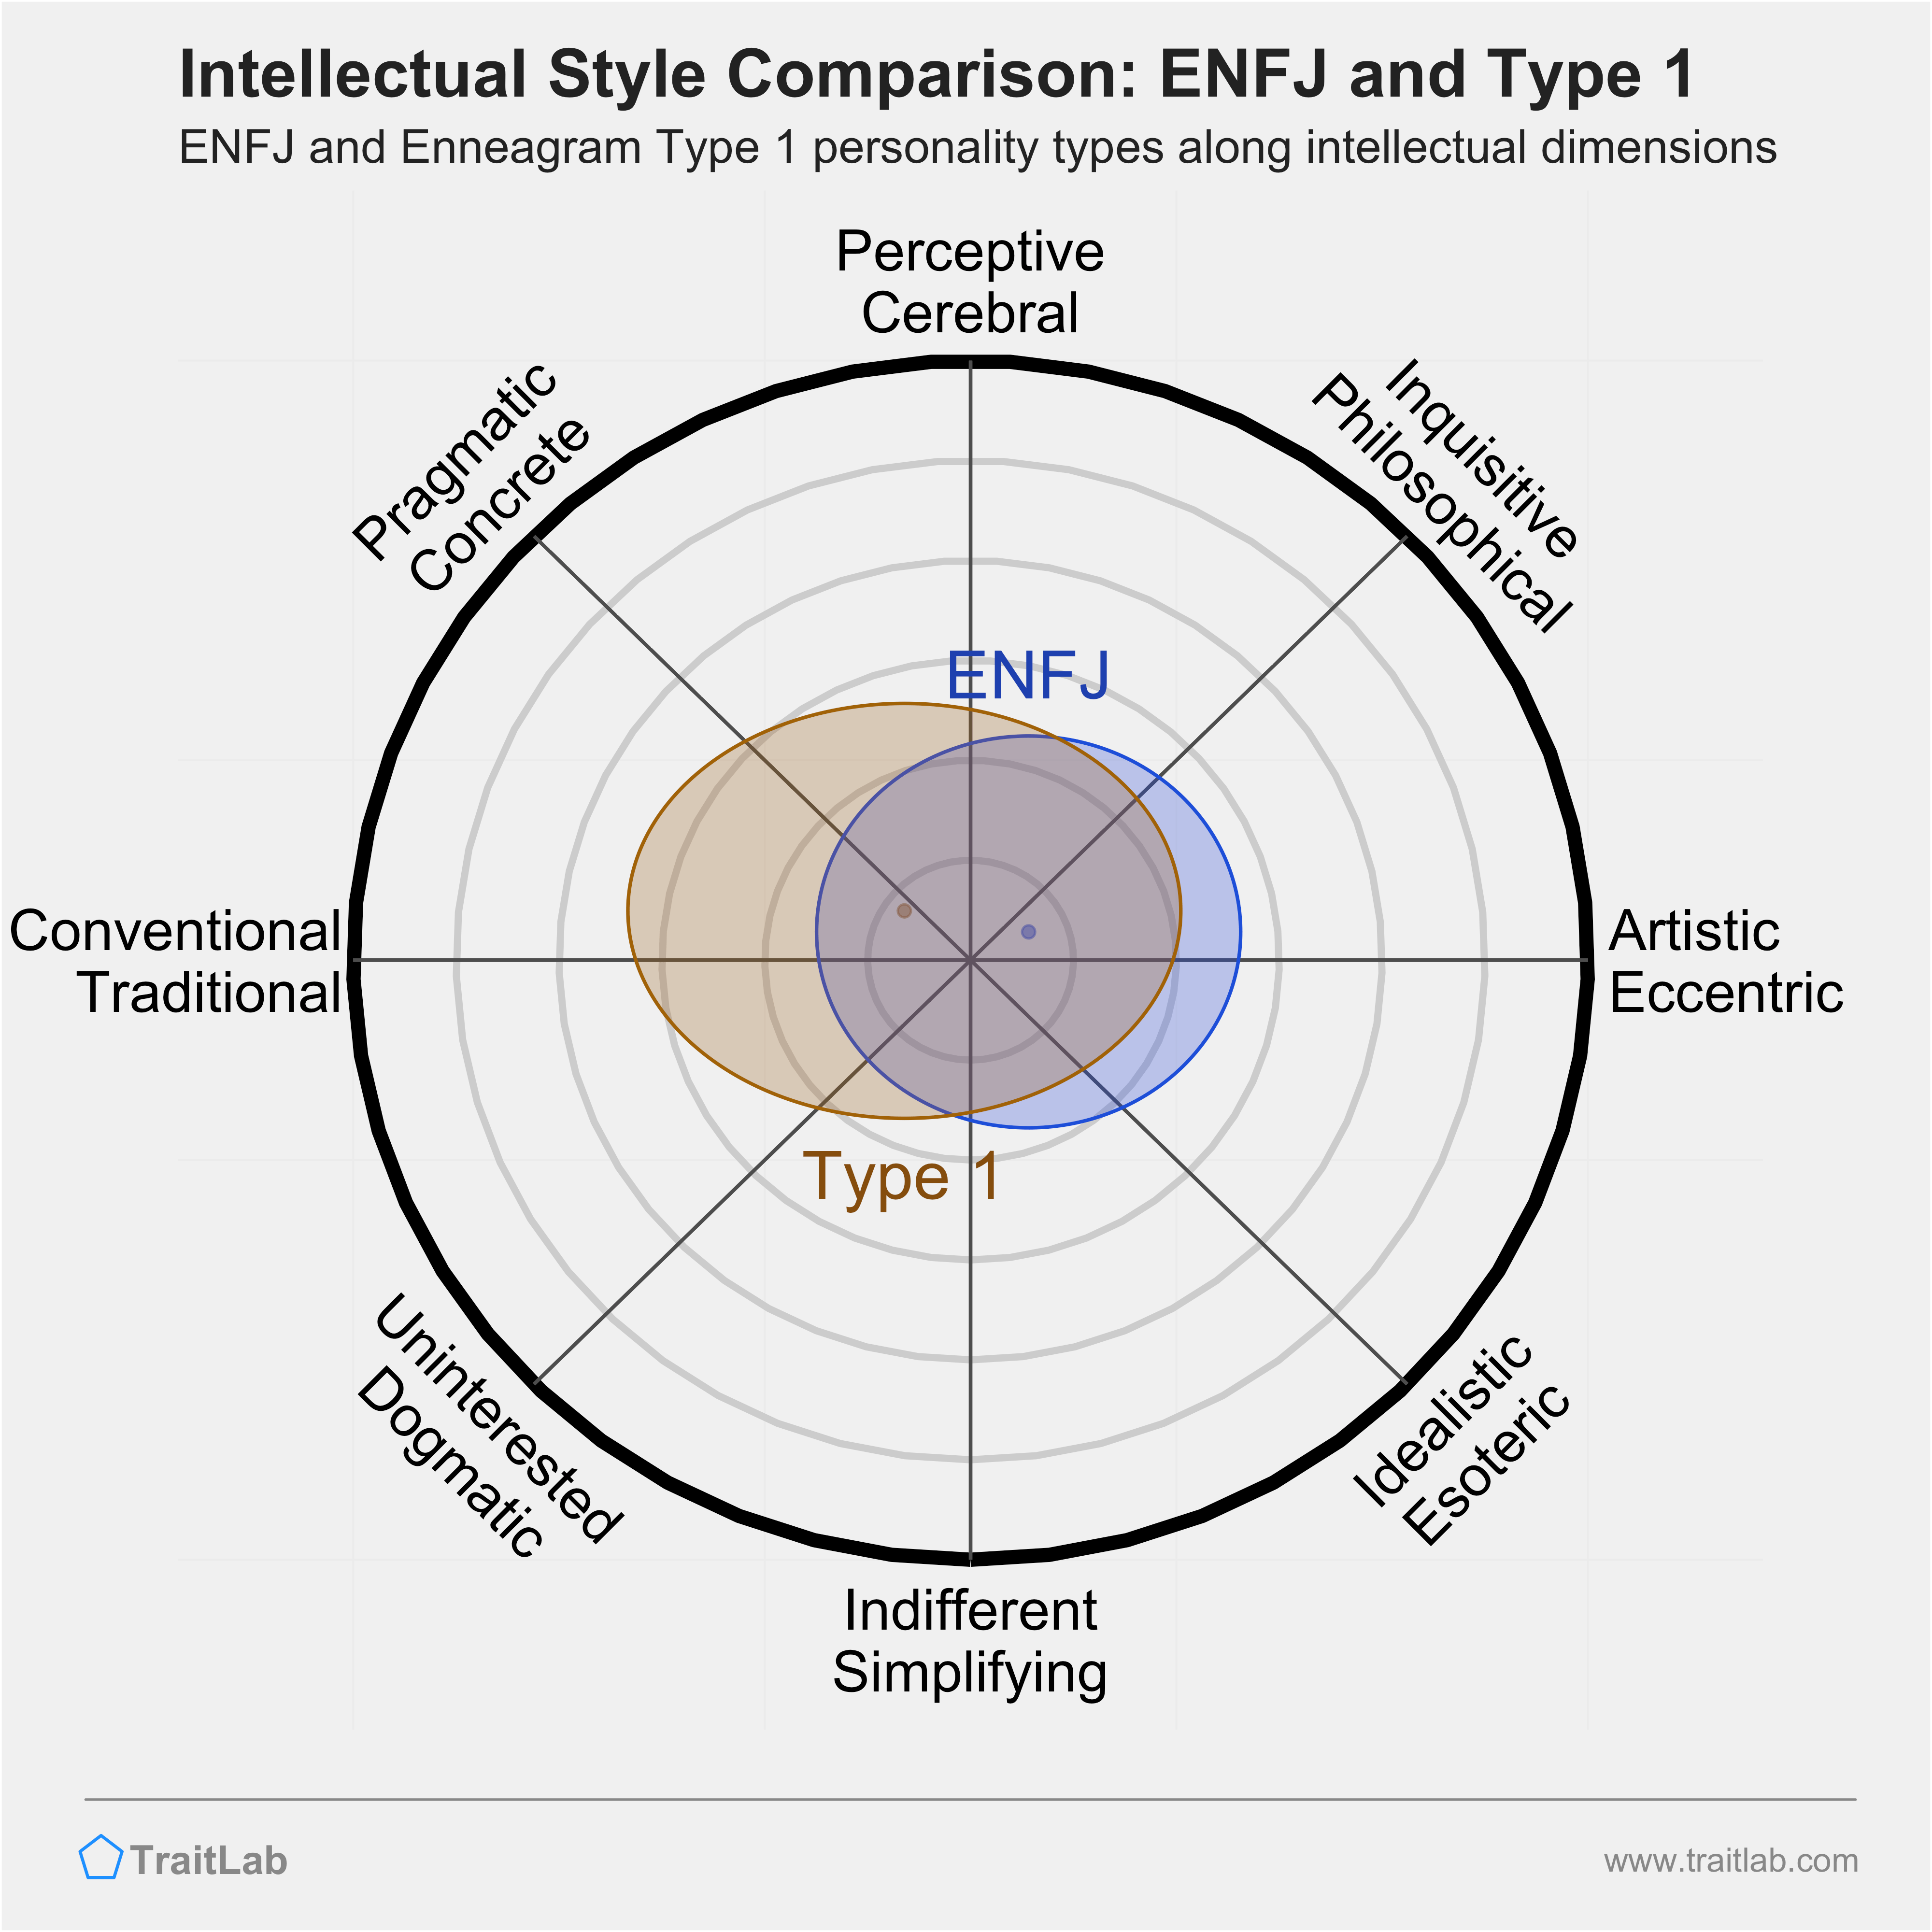 ENFJ and Type 1 comparison across intellectual dimensions